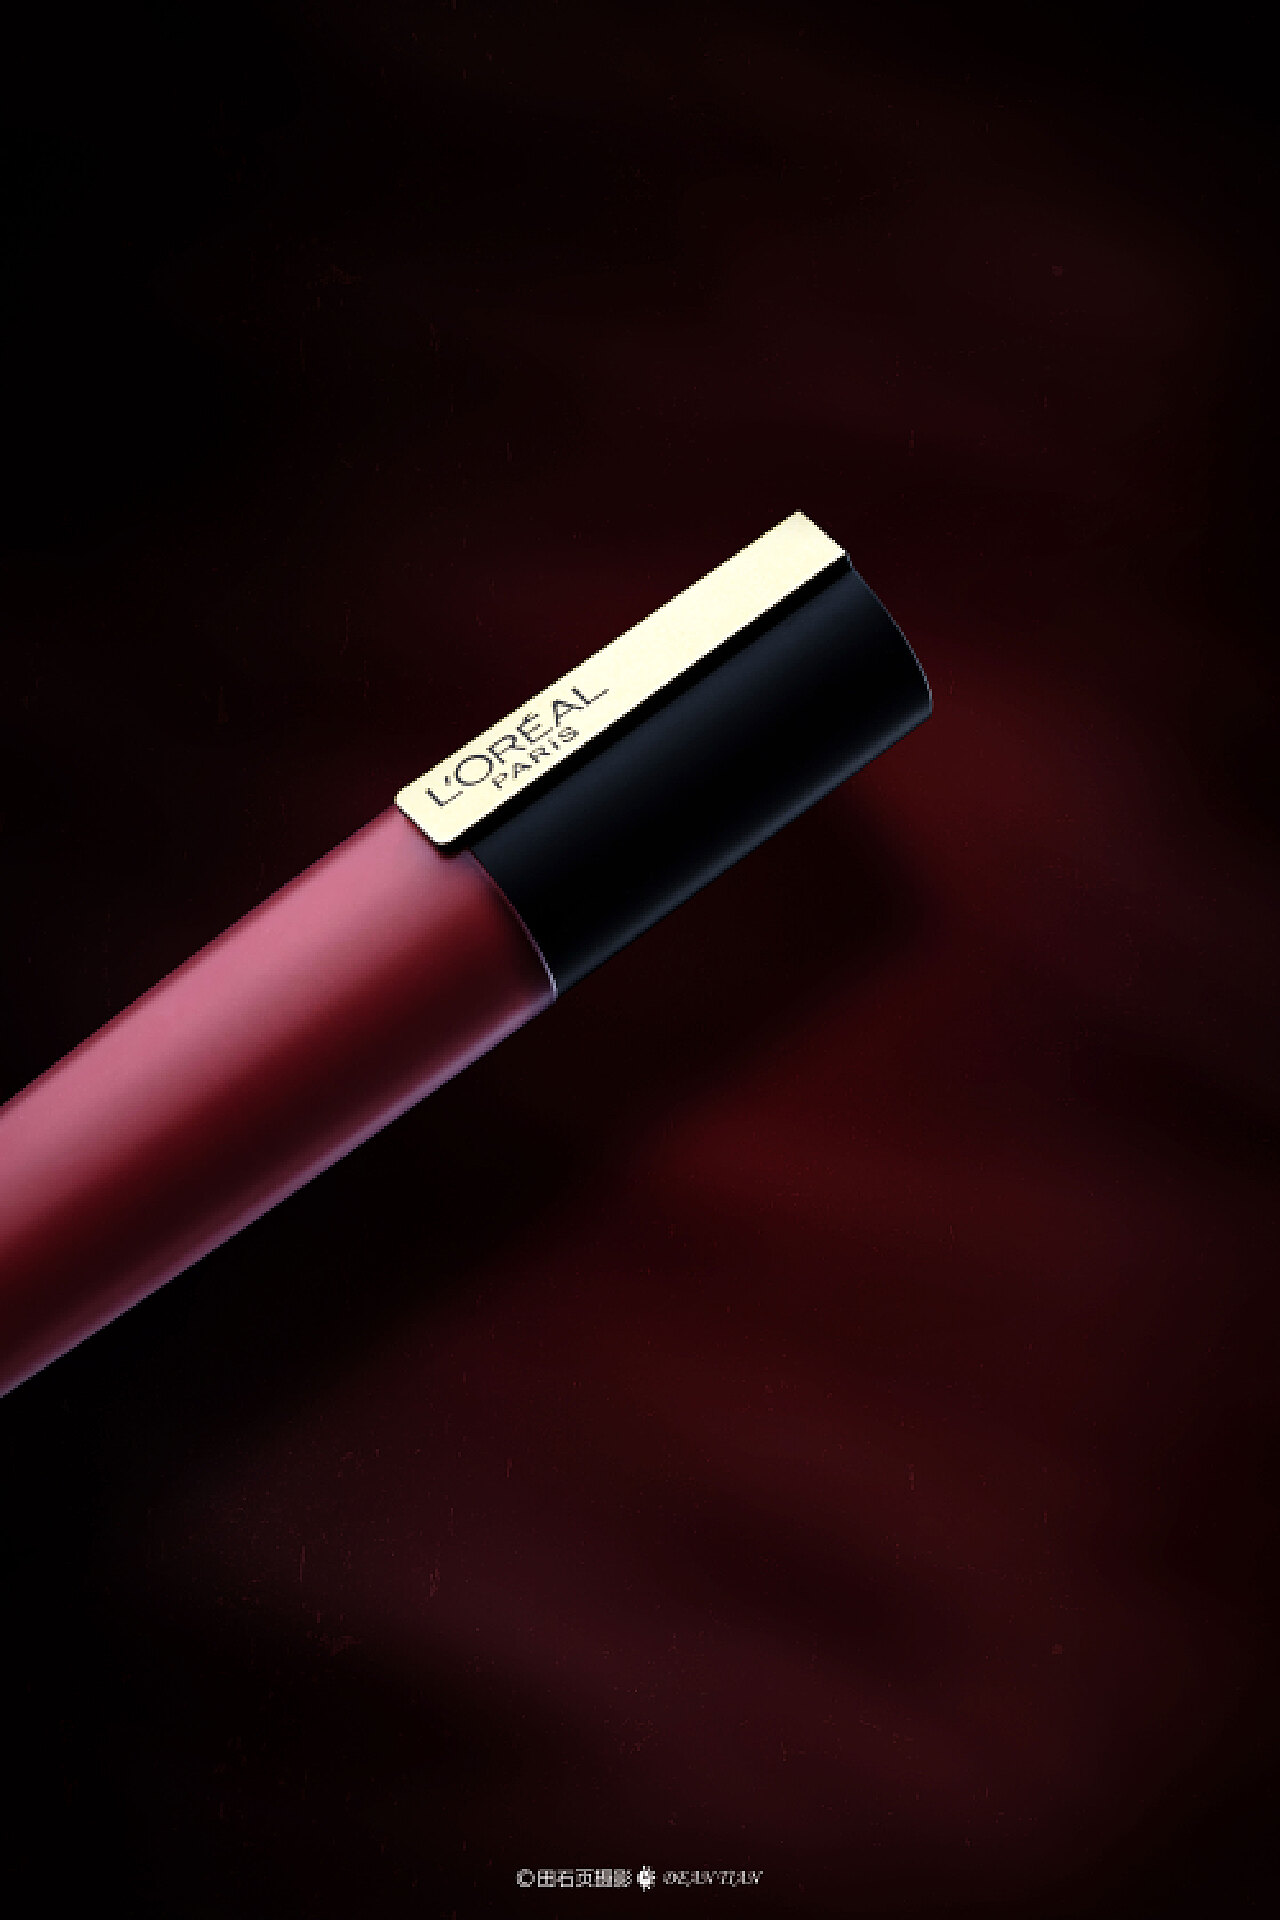 L’OREAL 欧莱雅 ROUGE SIGNATURE小钢笔唇釉试色，质地轻薄|唇釉|钢笔|欧莱雅_新浪网